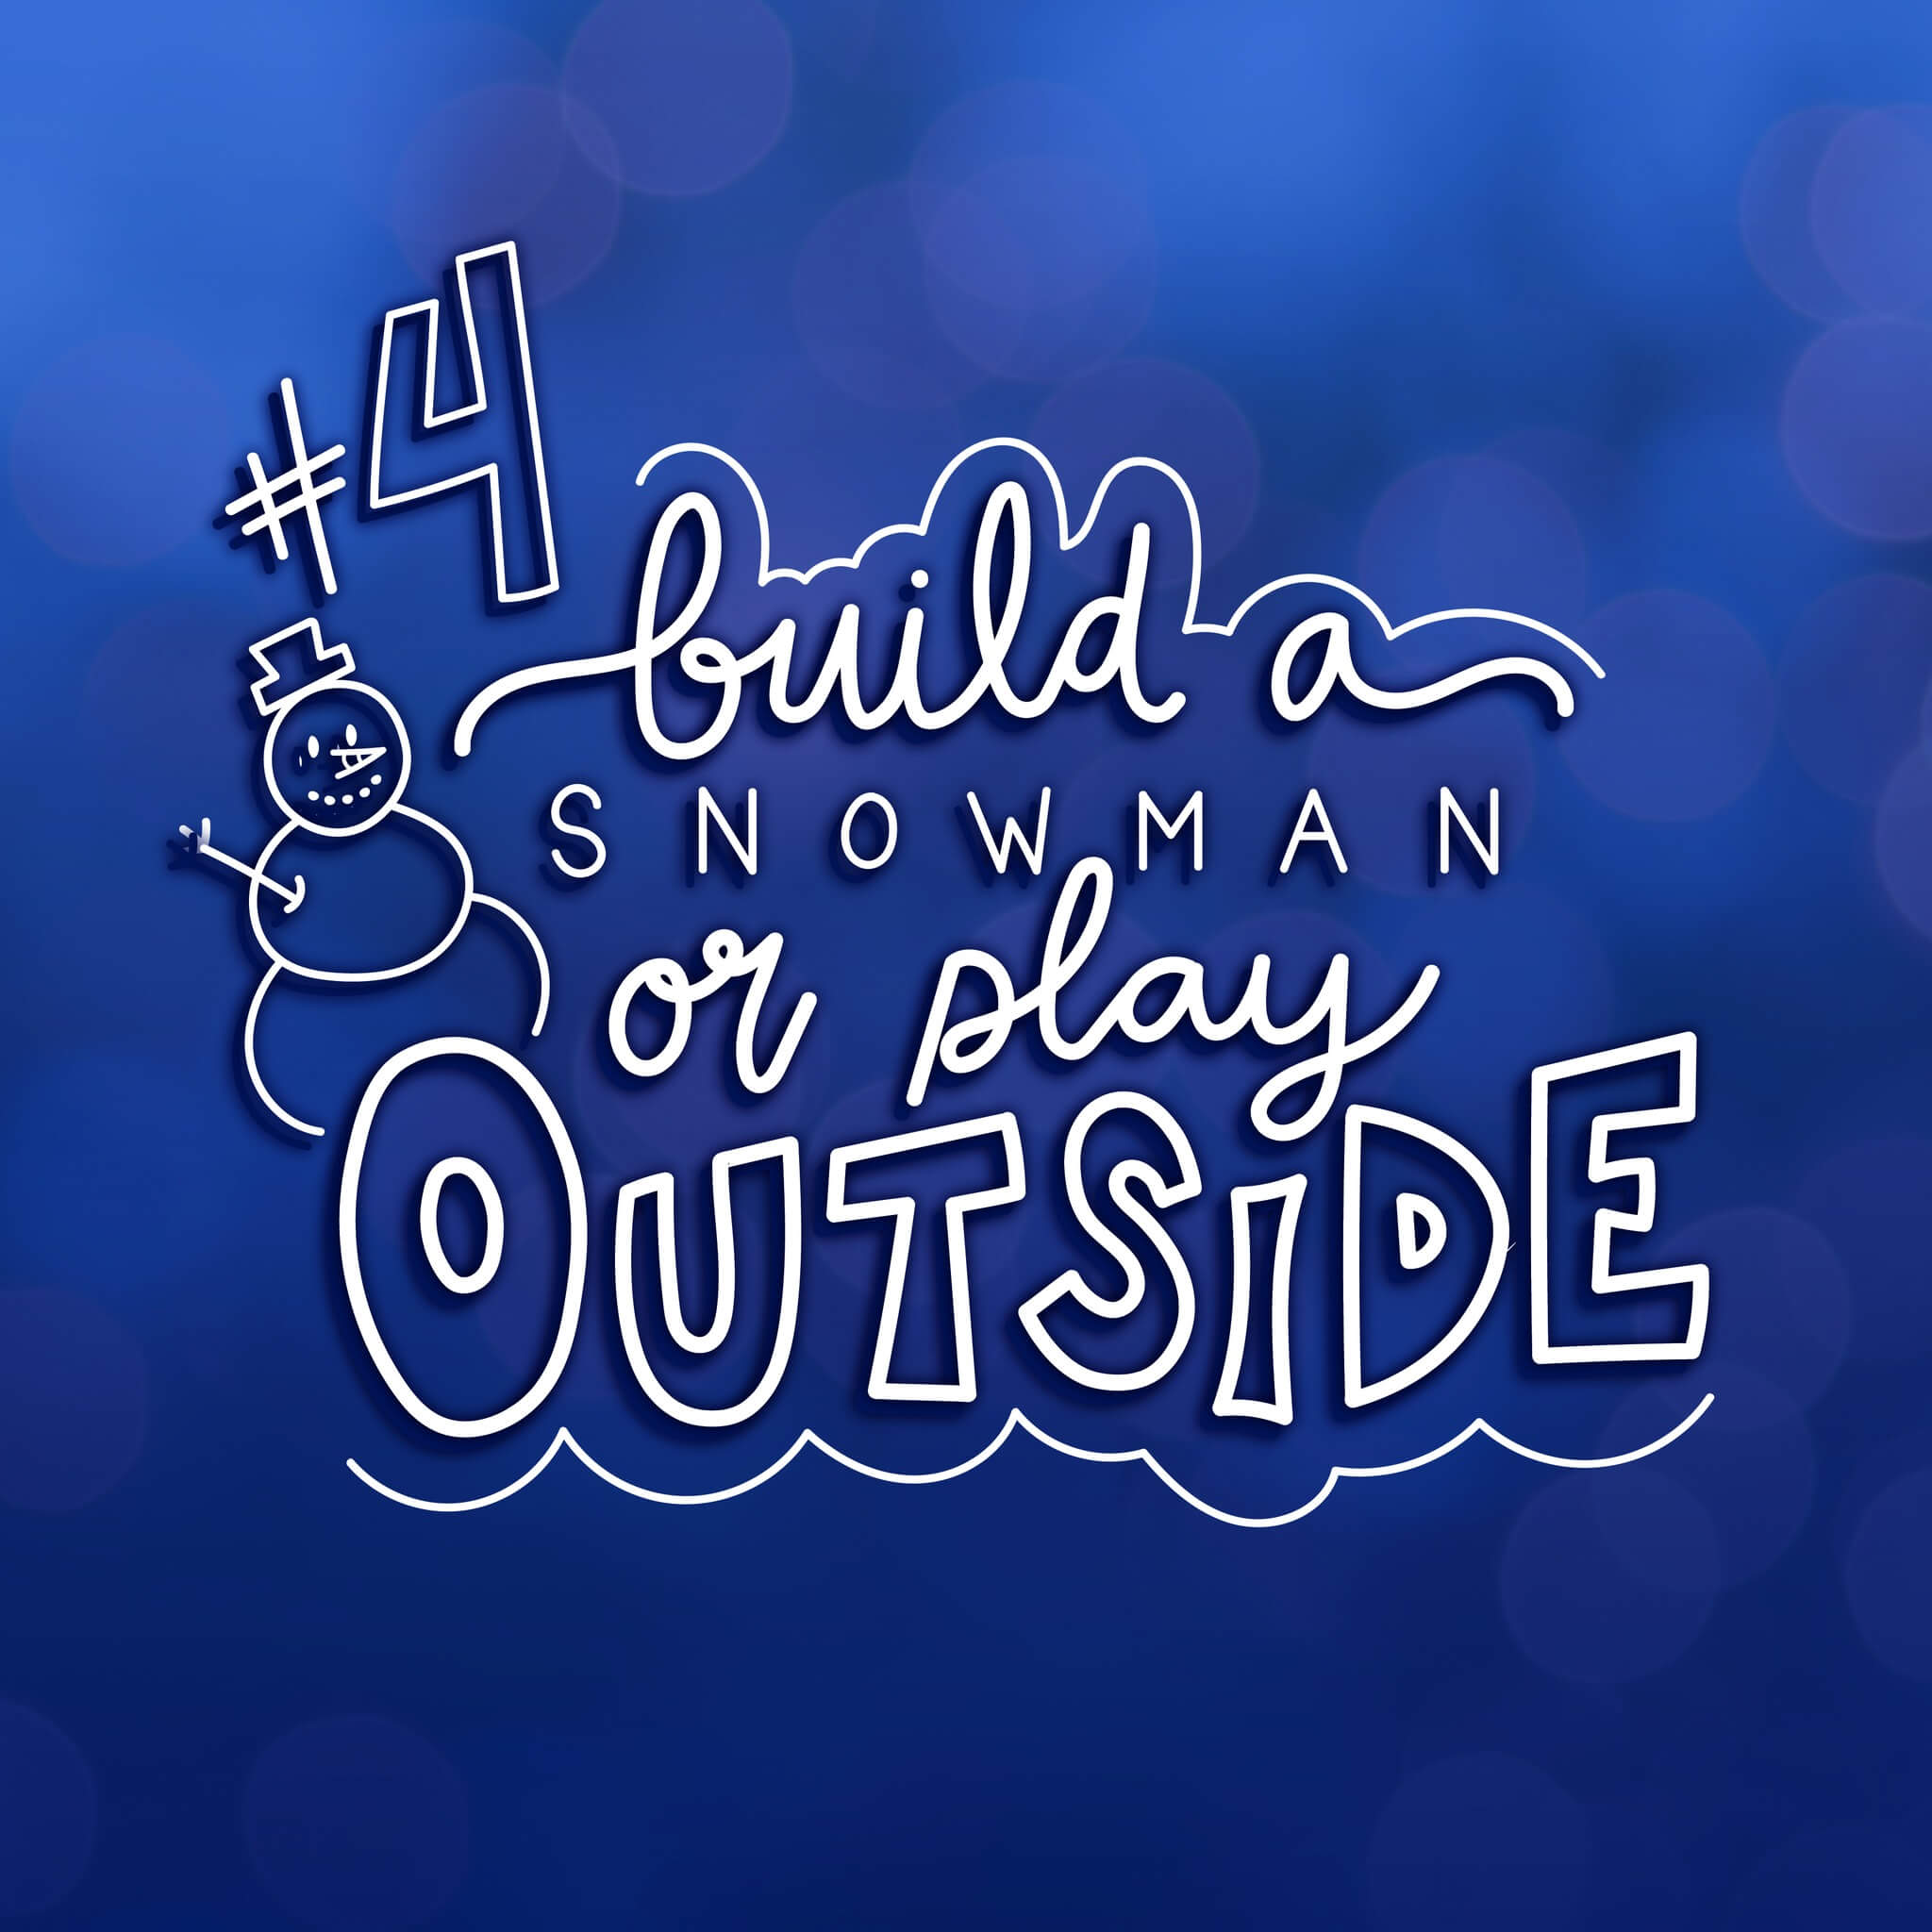 Bucket List #4: Build a snowman or play outside